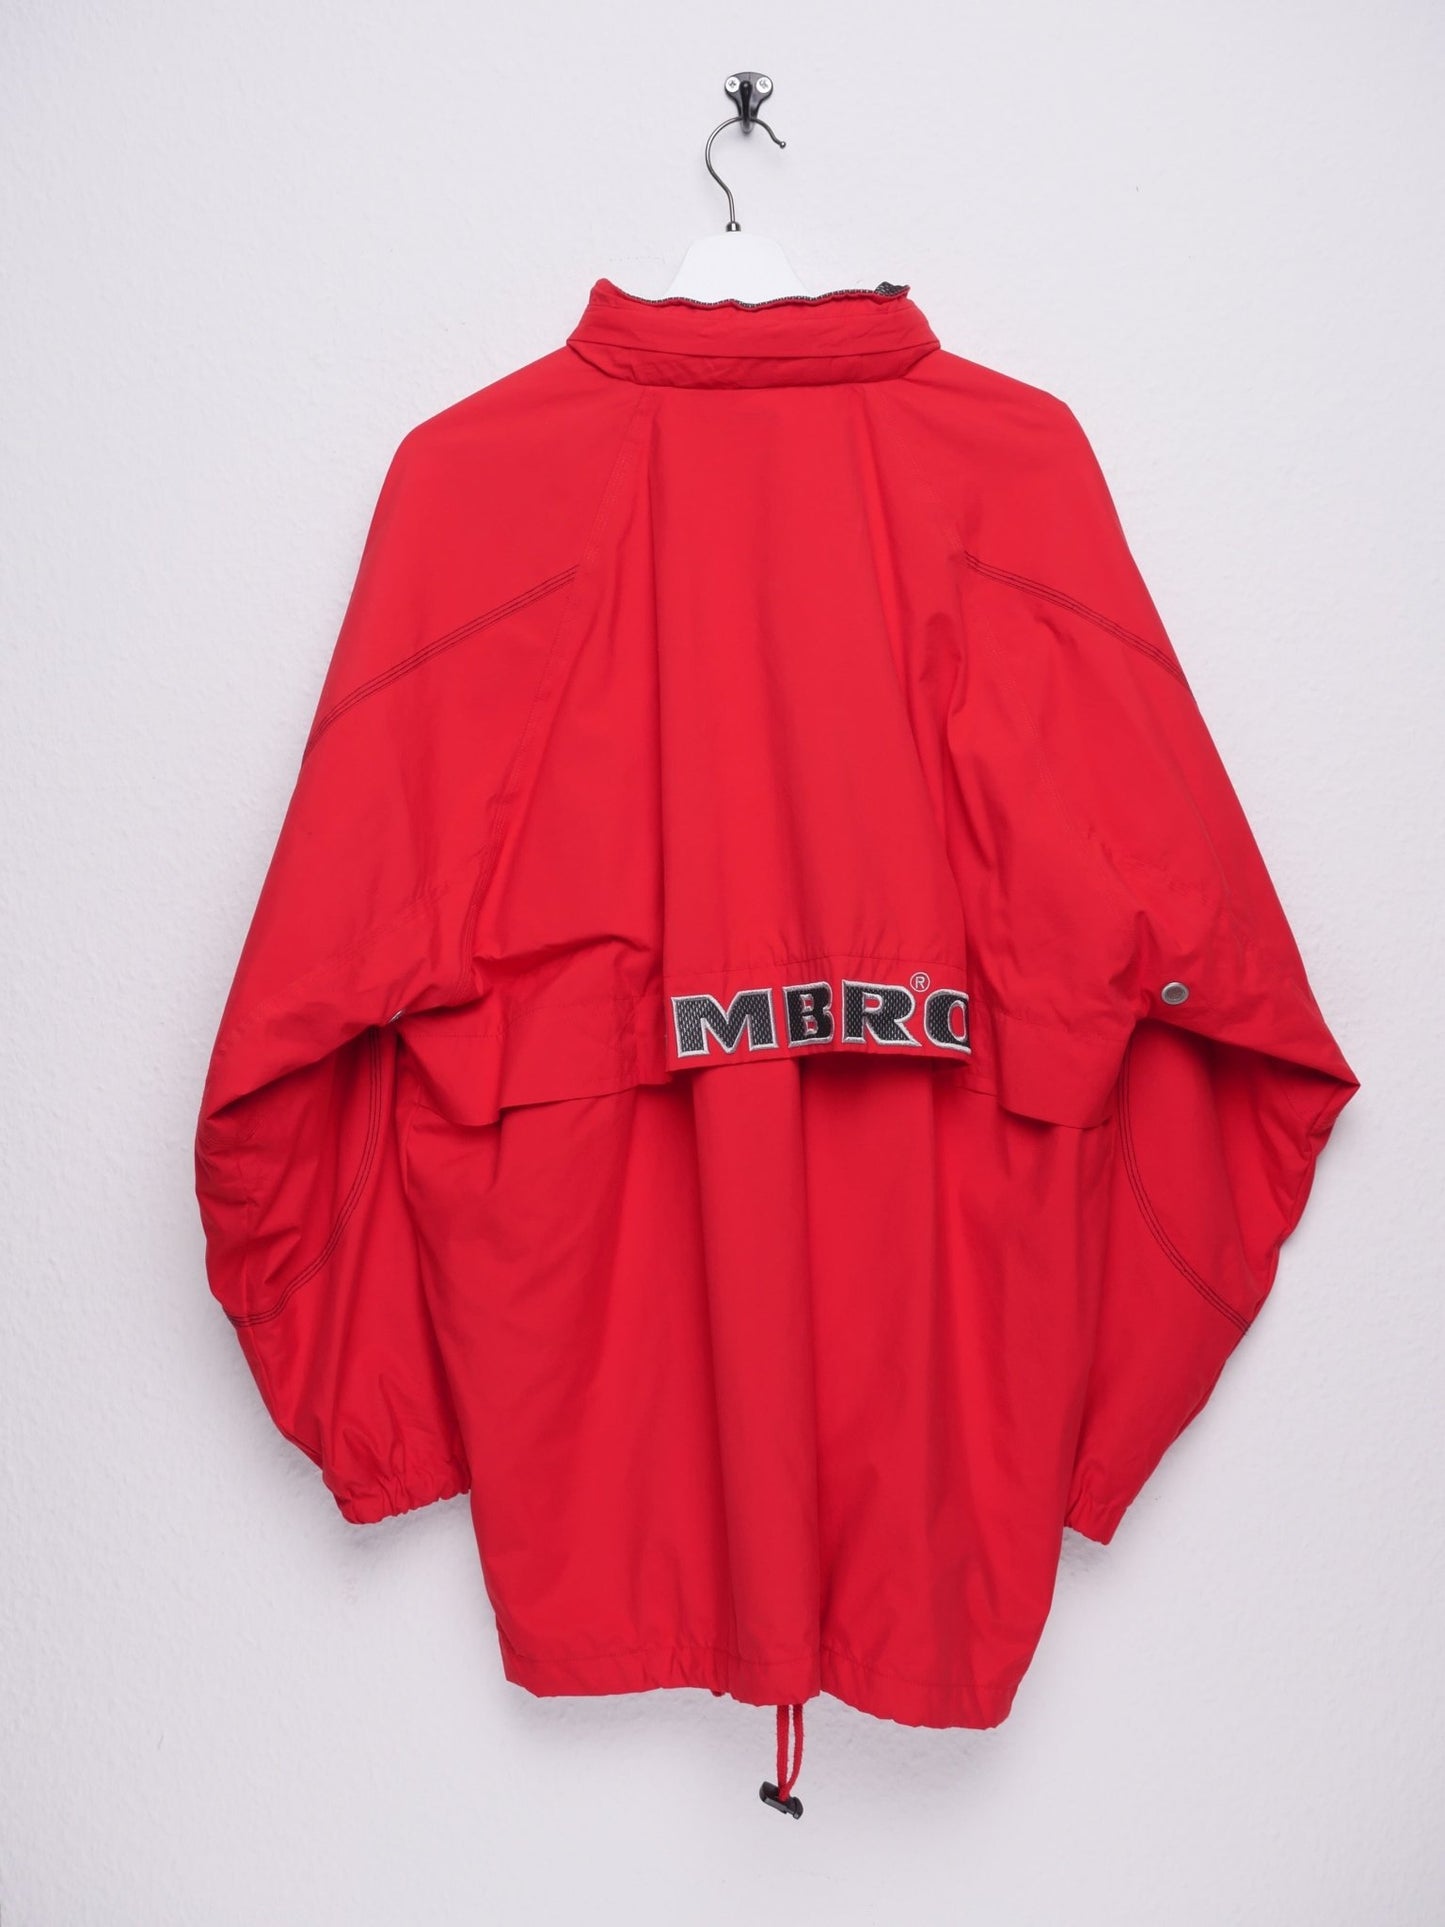 Umbro embroidered Logo red Vintage Track Jacket - Peeces